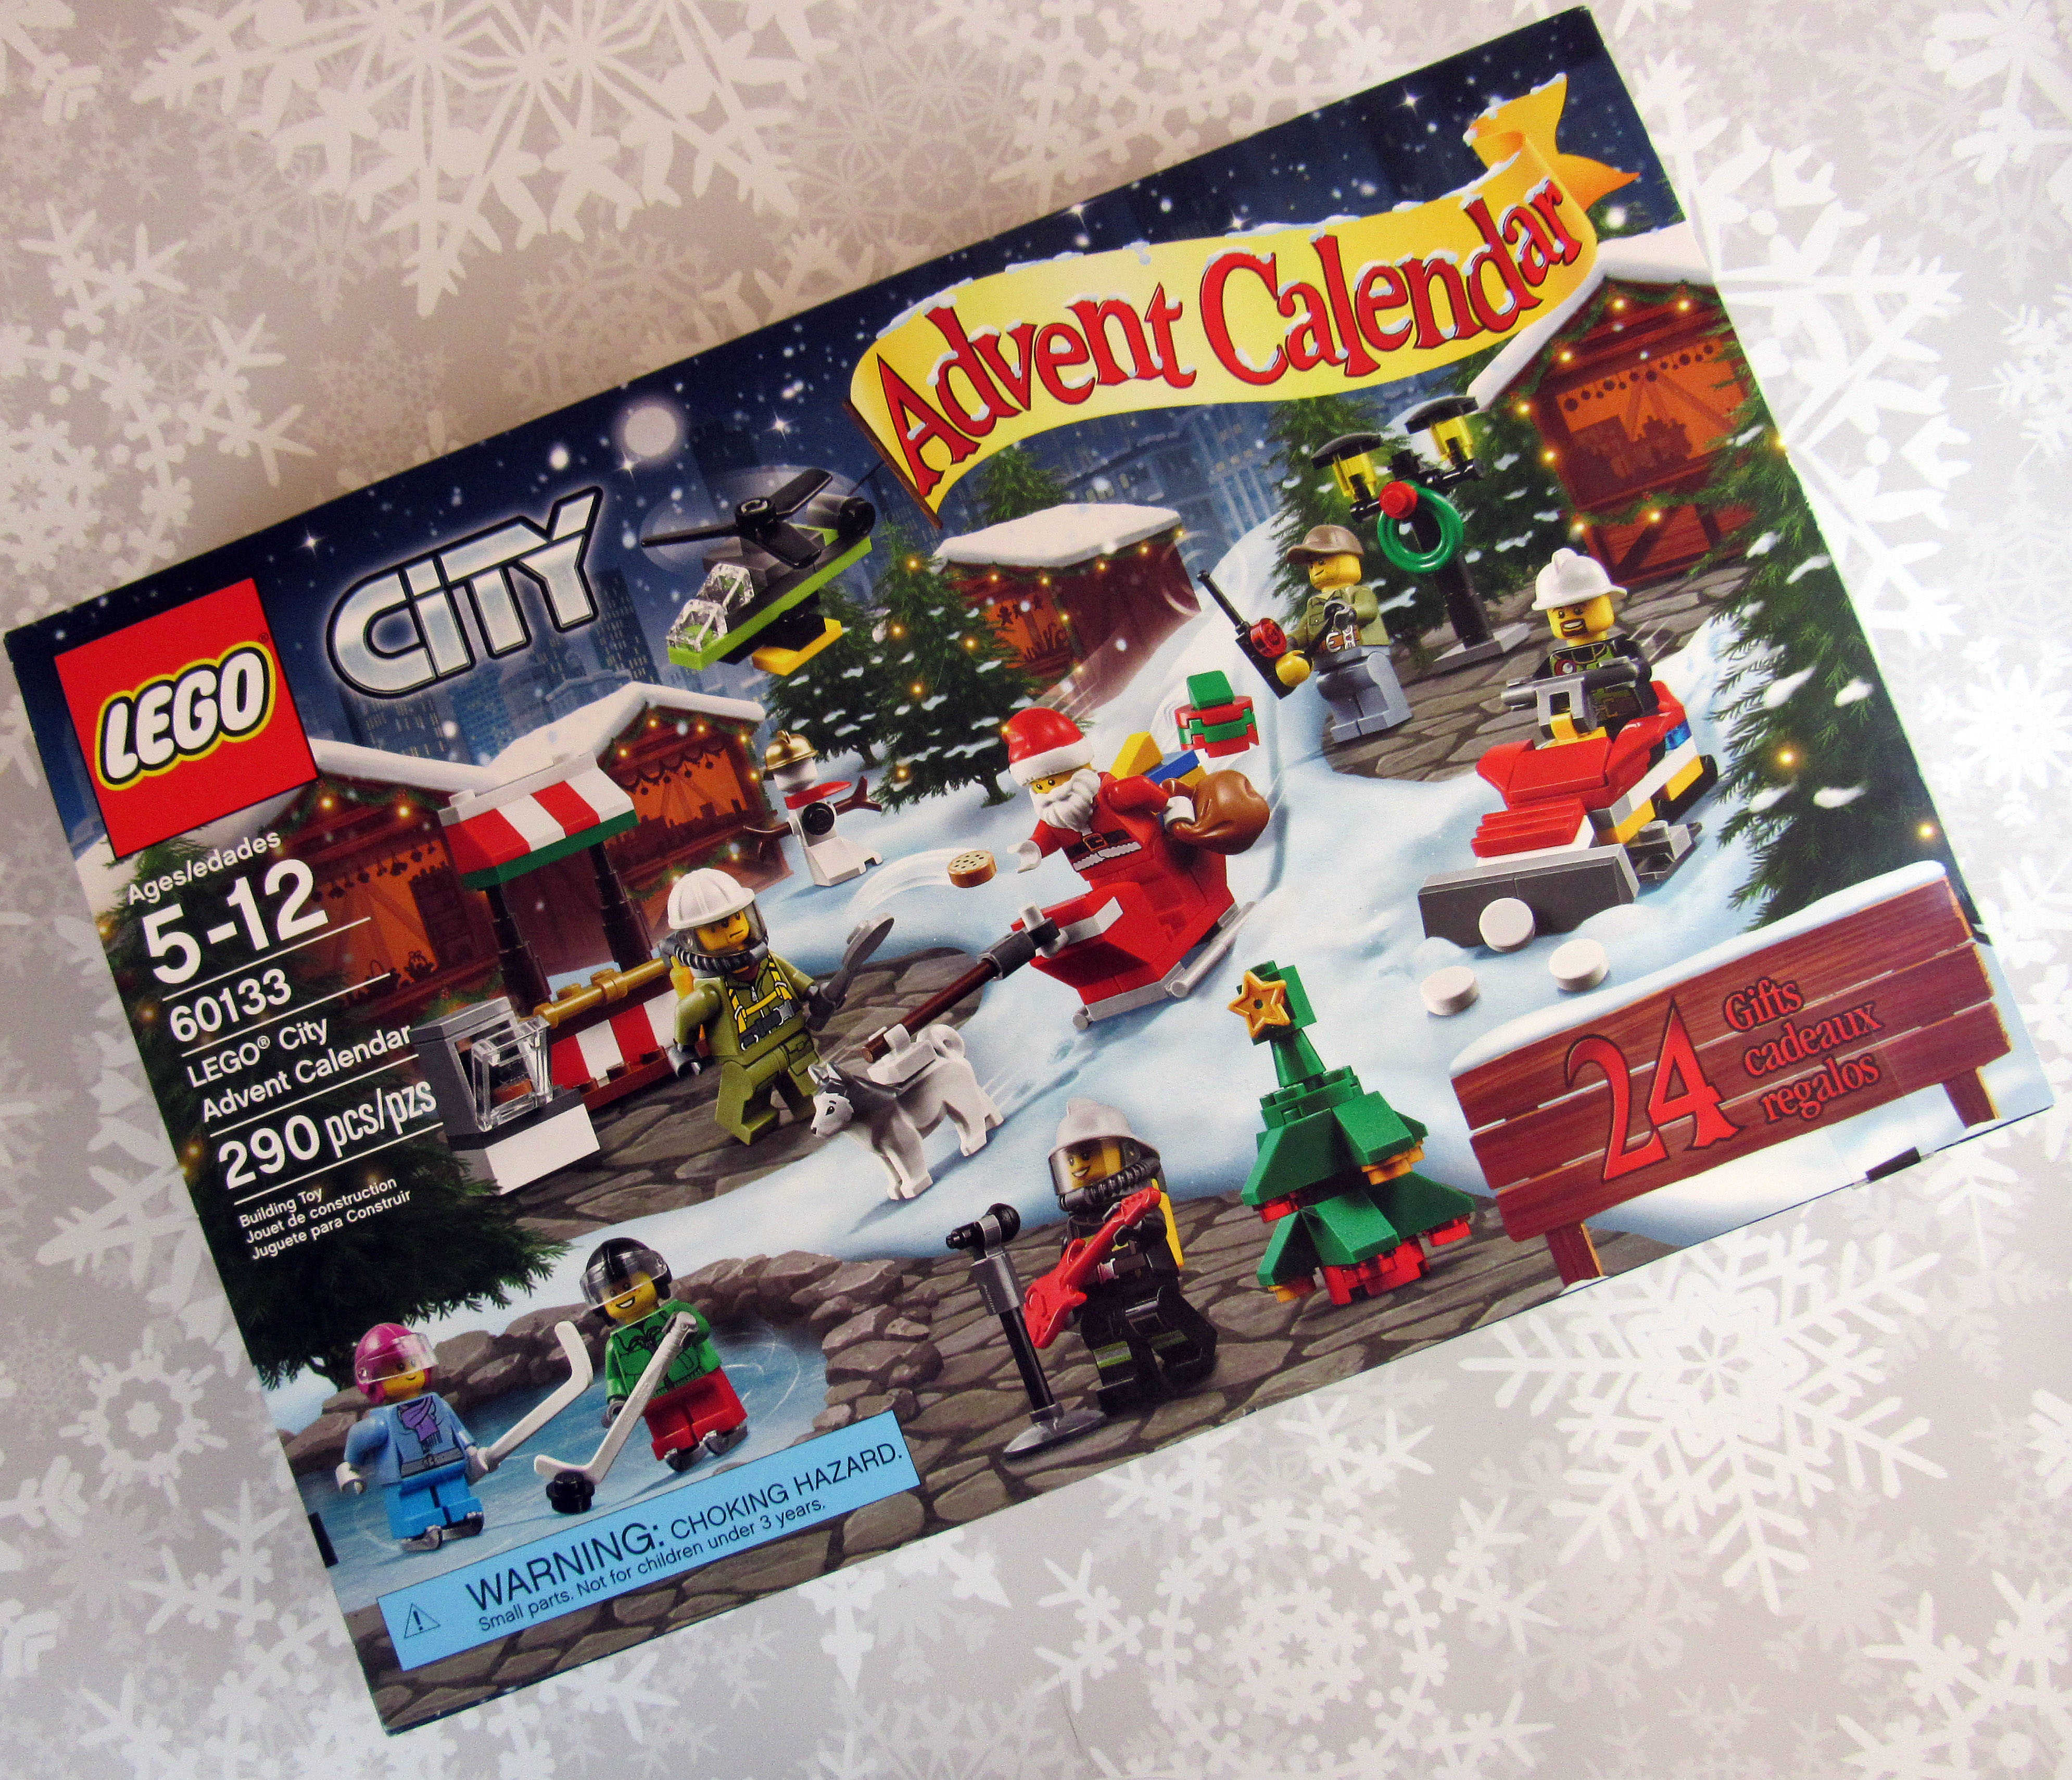 Lego City Calendar 2016 Mini Review - Subscription